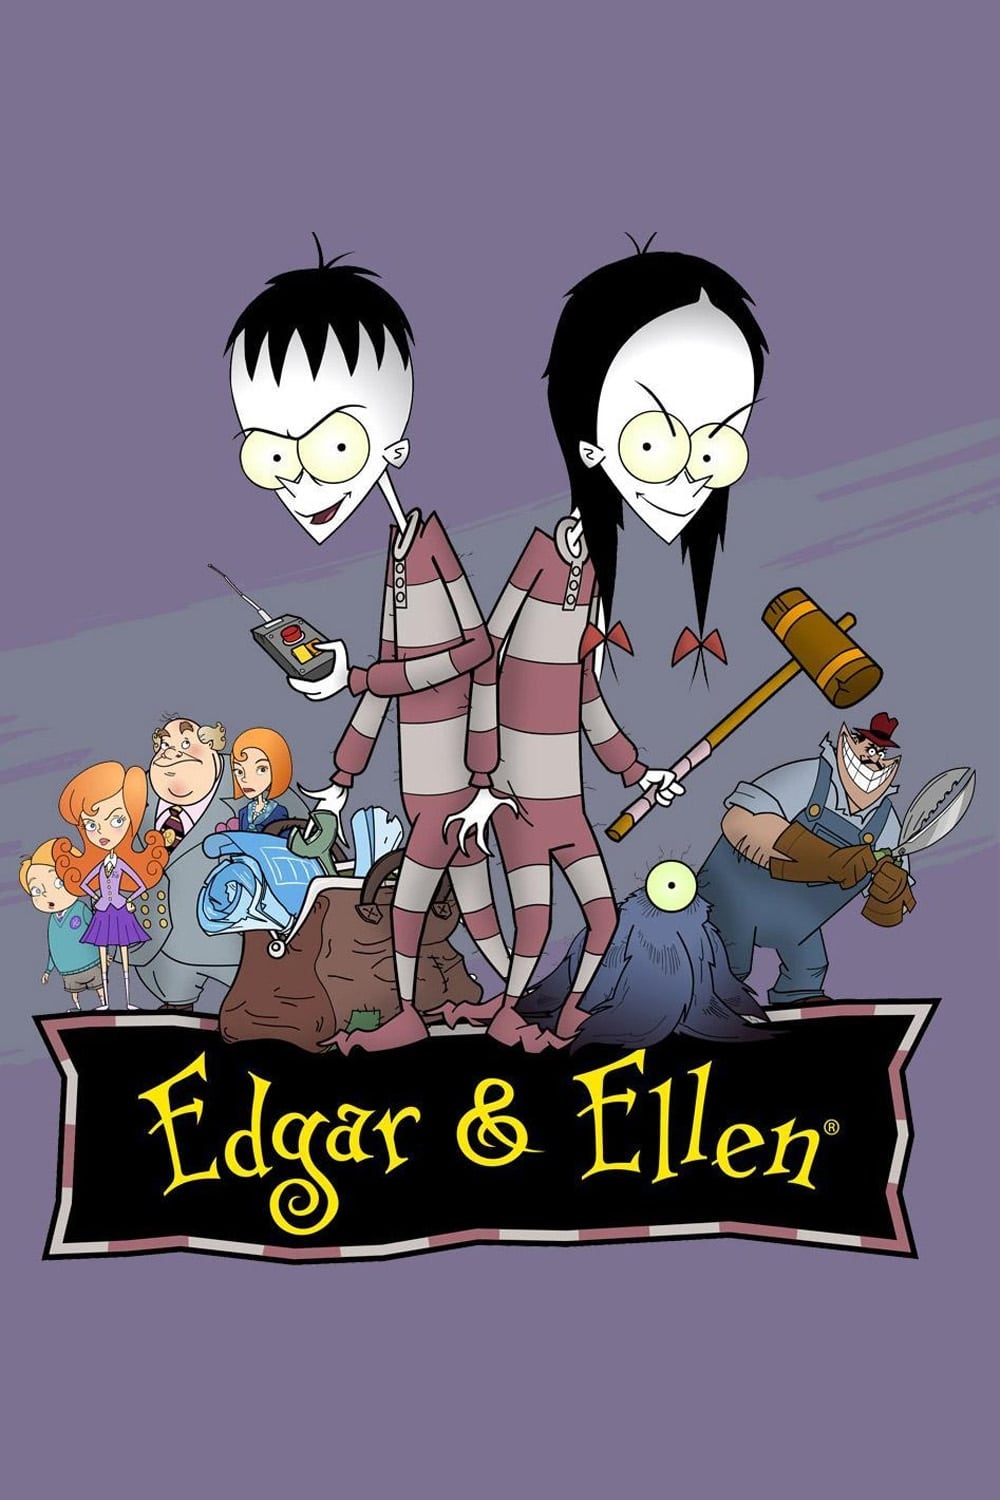 Edgar & Ellen